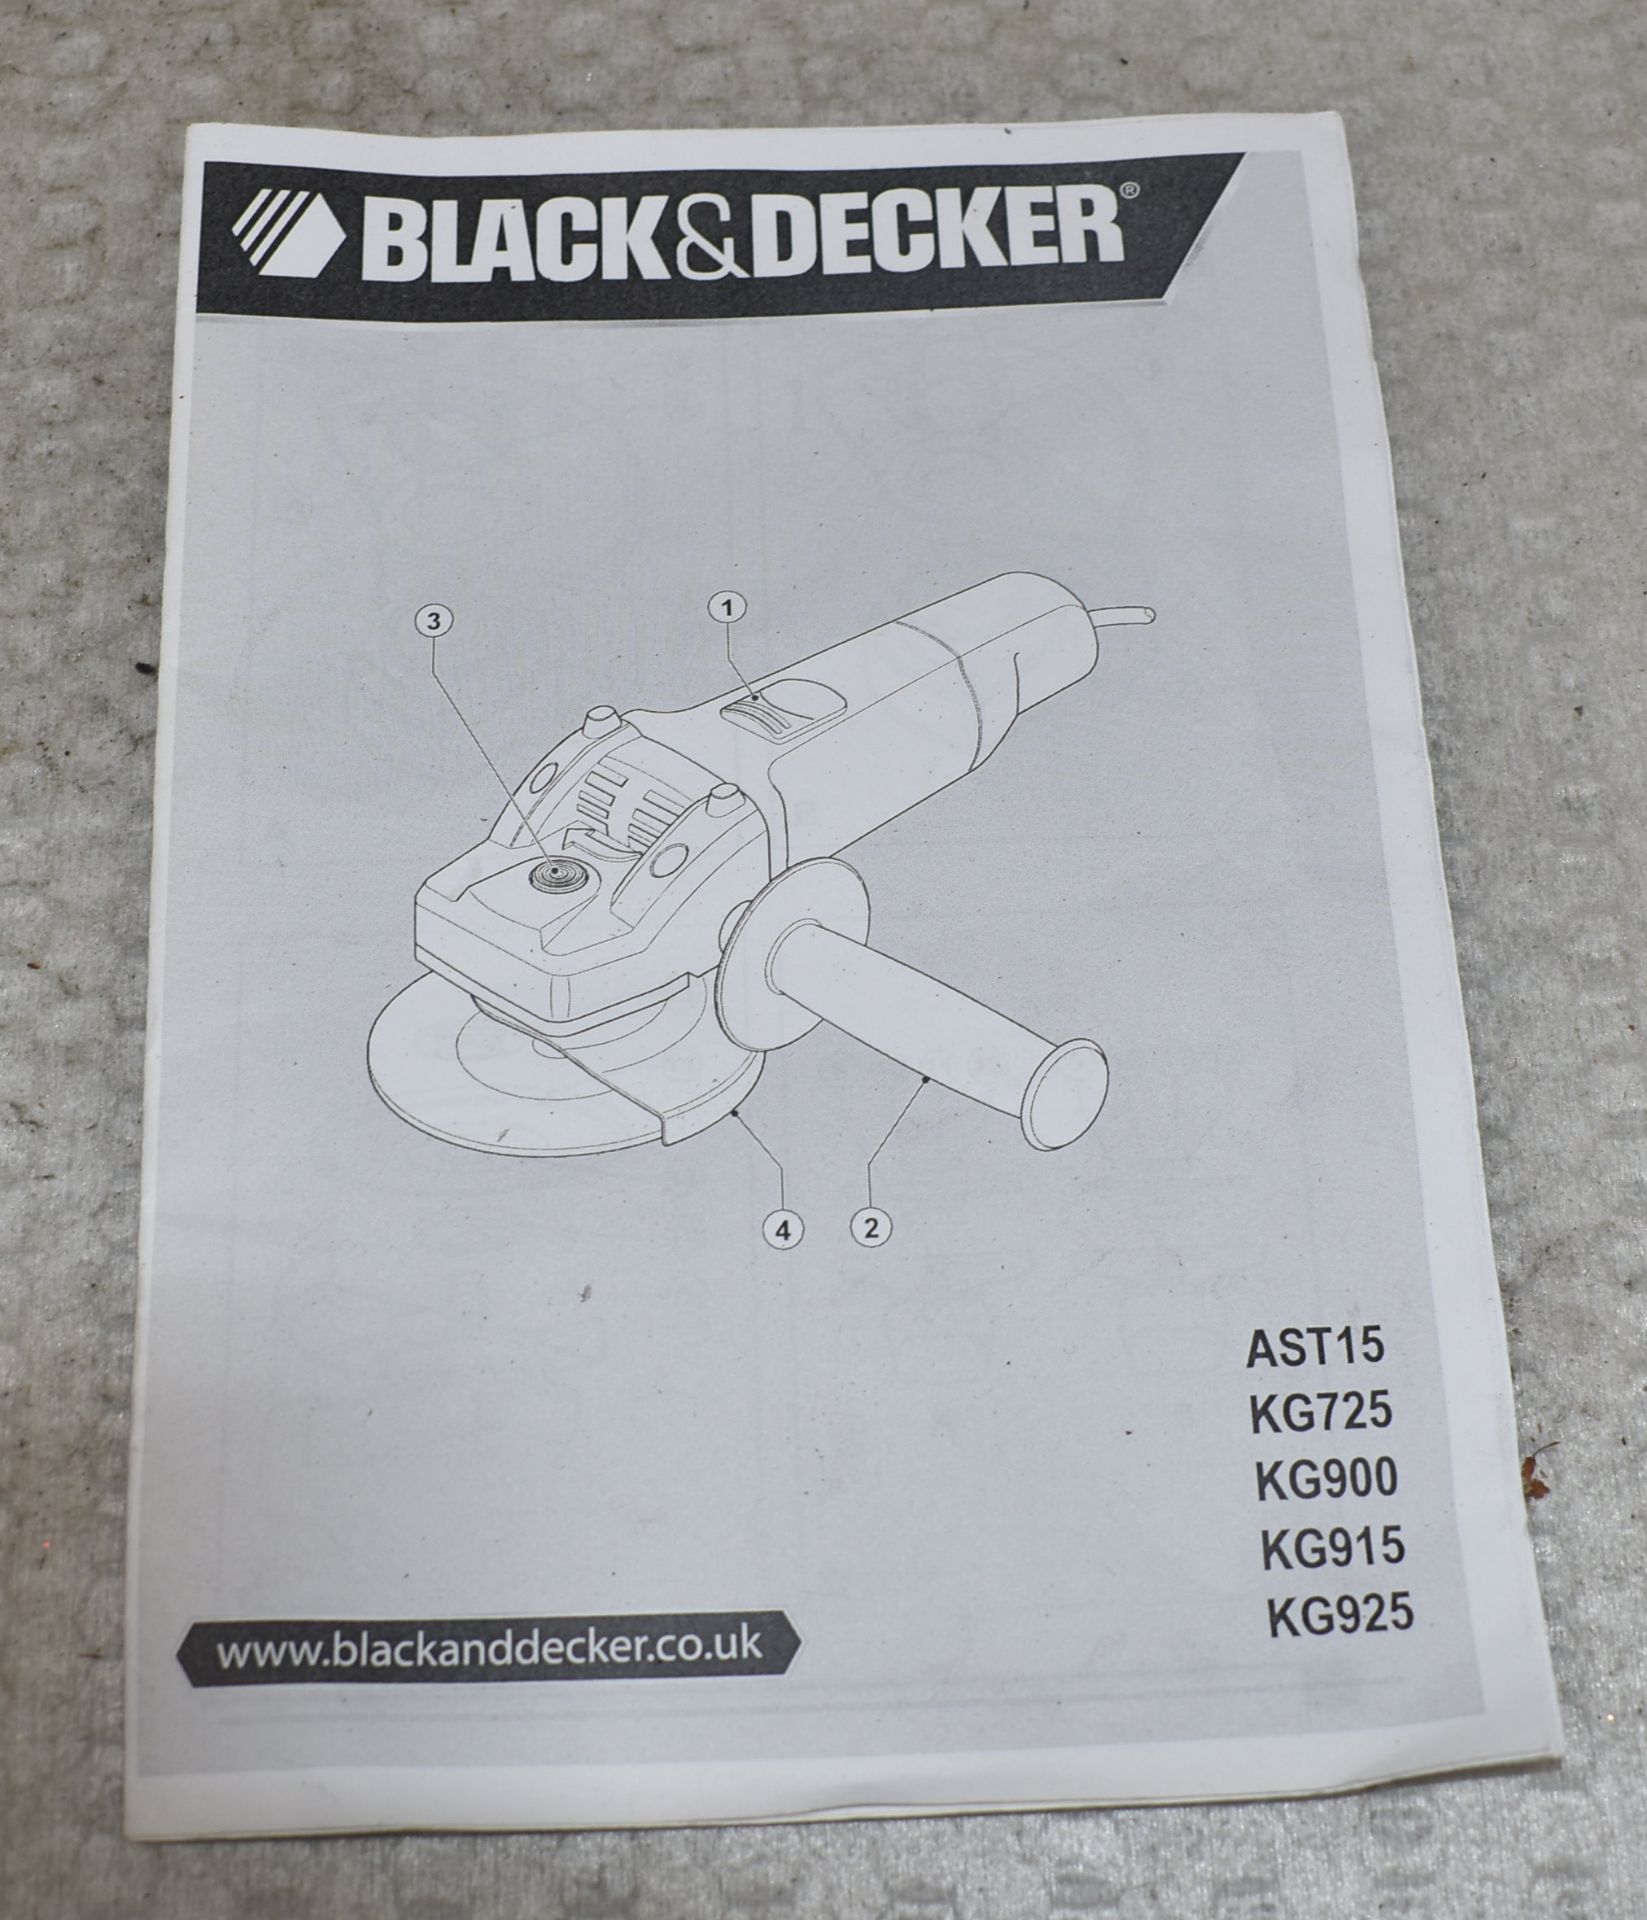 1 x BLACK DECKER 900W 115Mm Angle Grinder In Stanley Toolbox - Model Kg915 - Ref: K257 - CL905 - Lo - Image 9 of 12